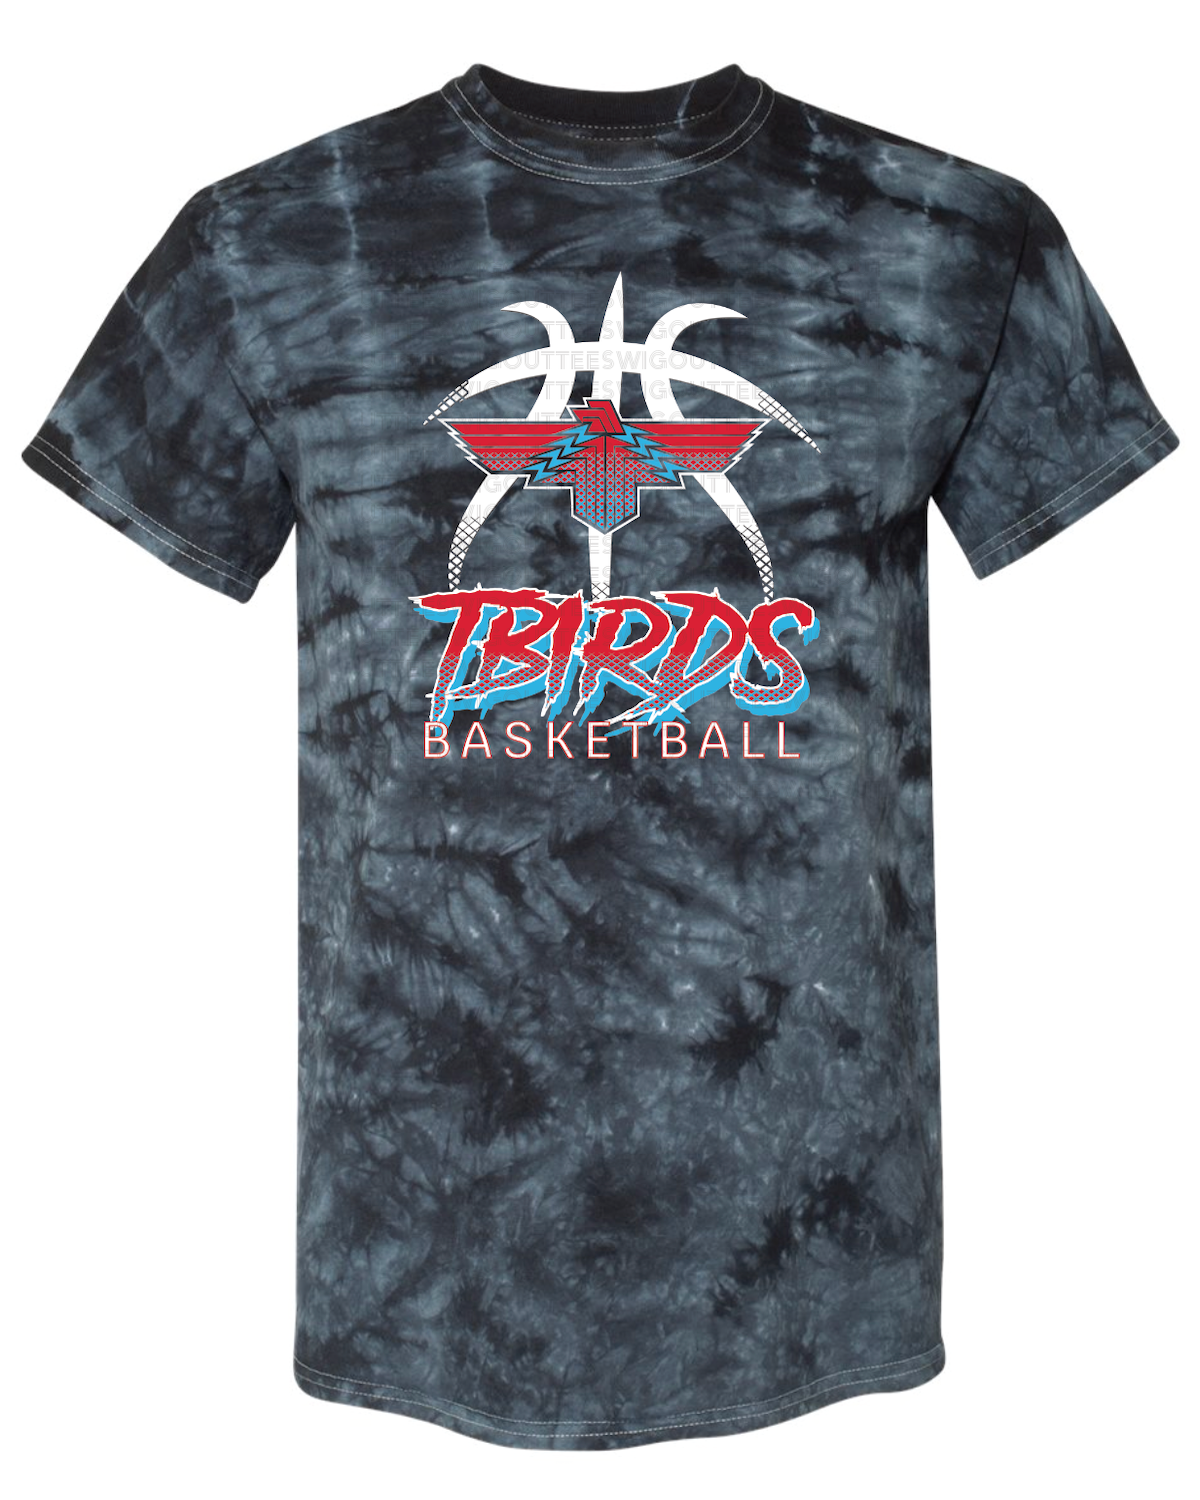 Tbirds Basketball Crystal Tie Dye T-shirt